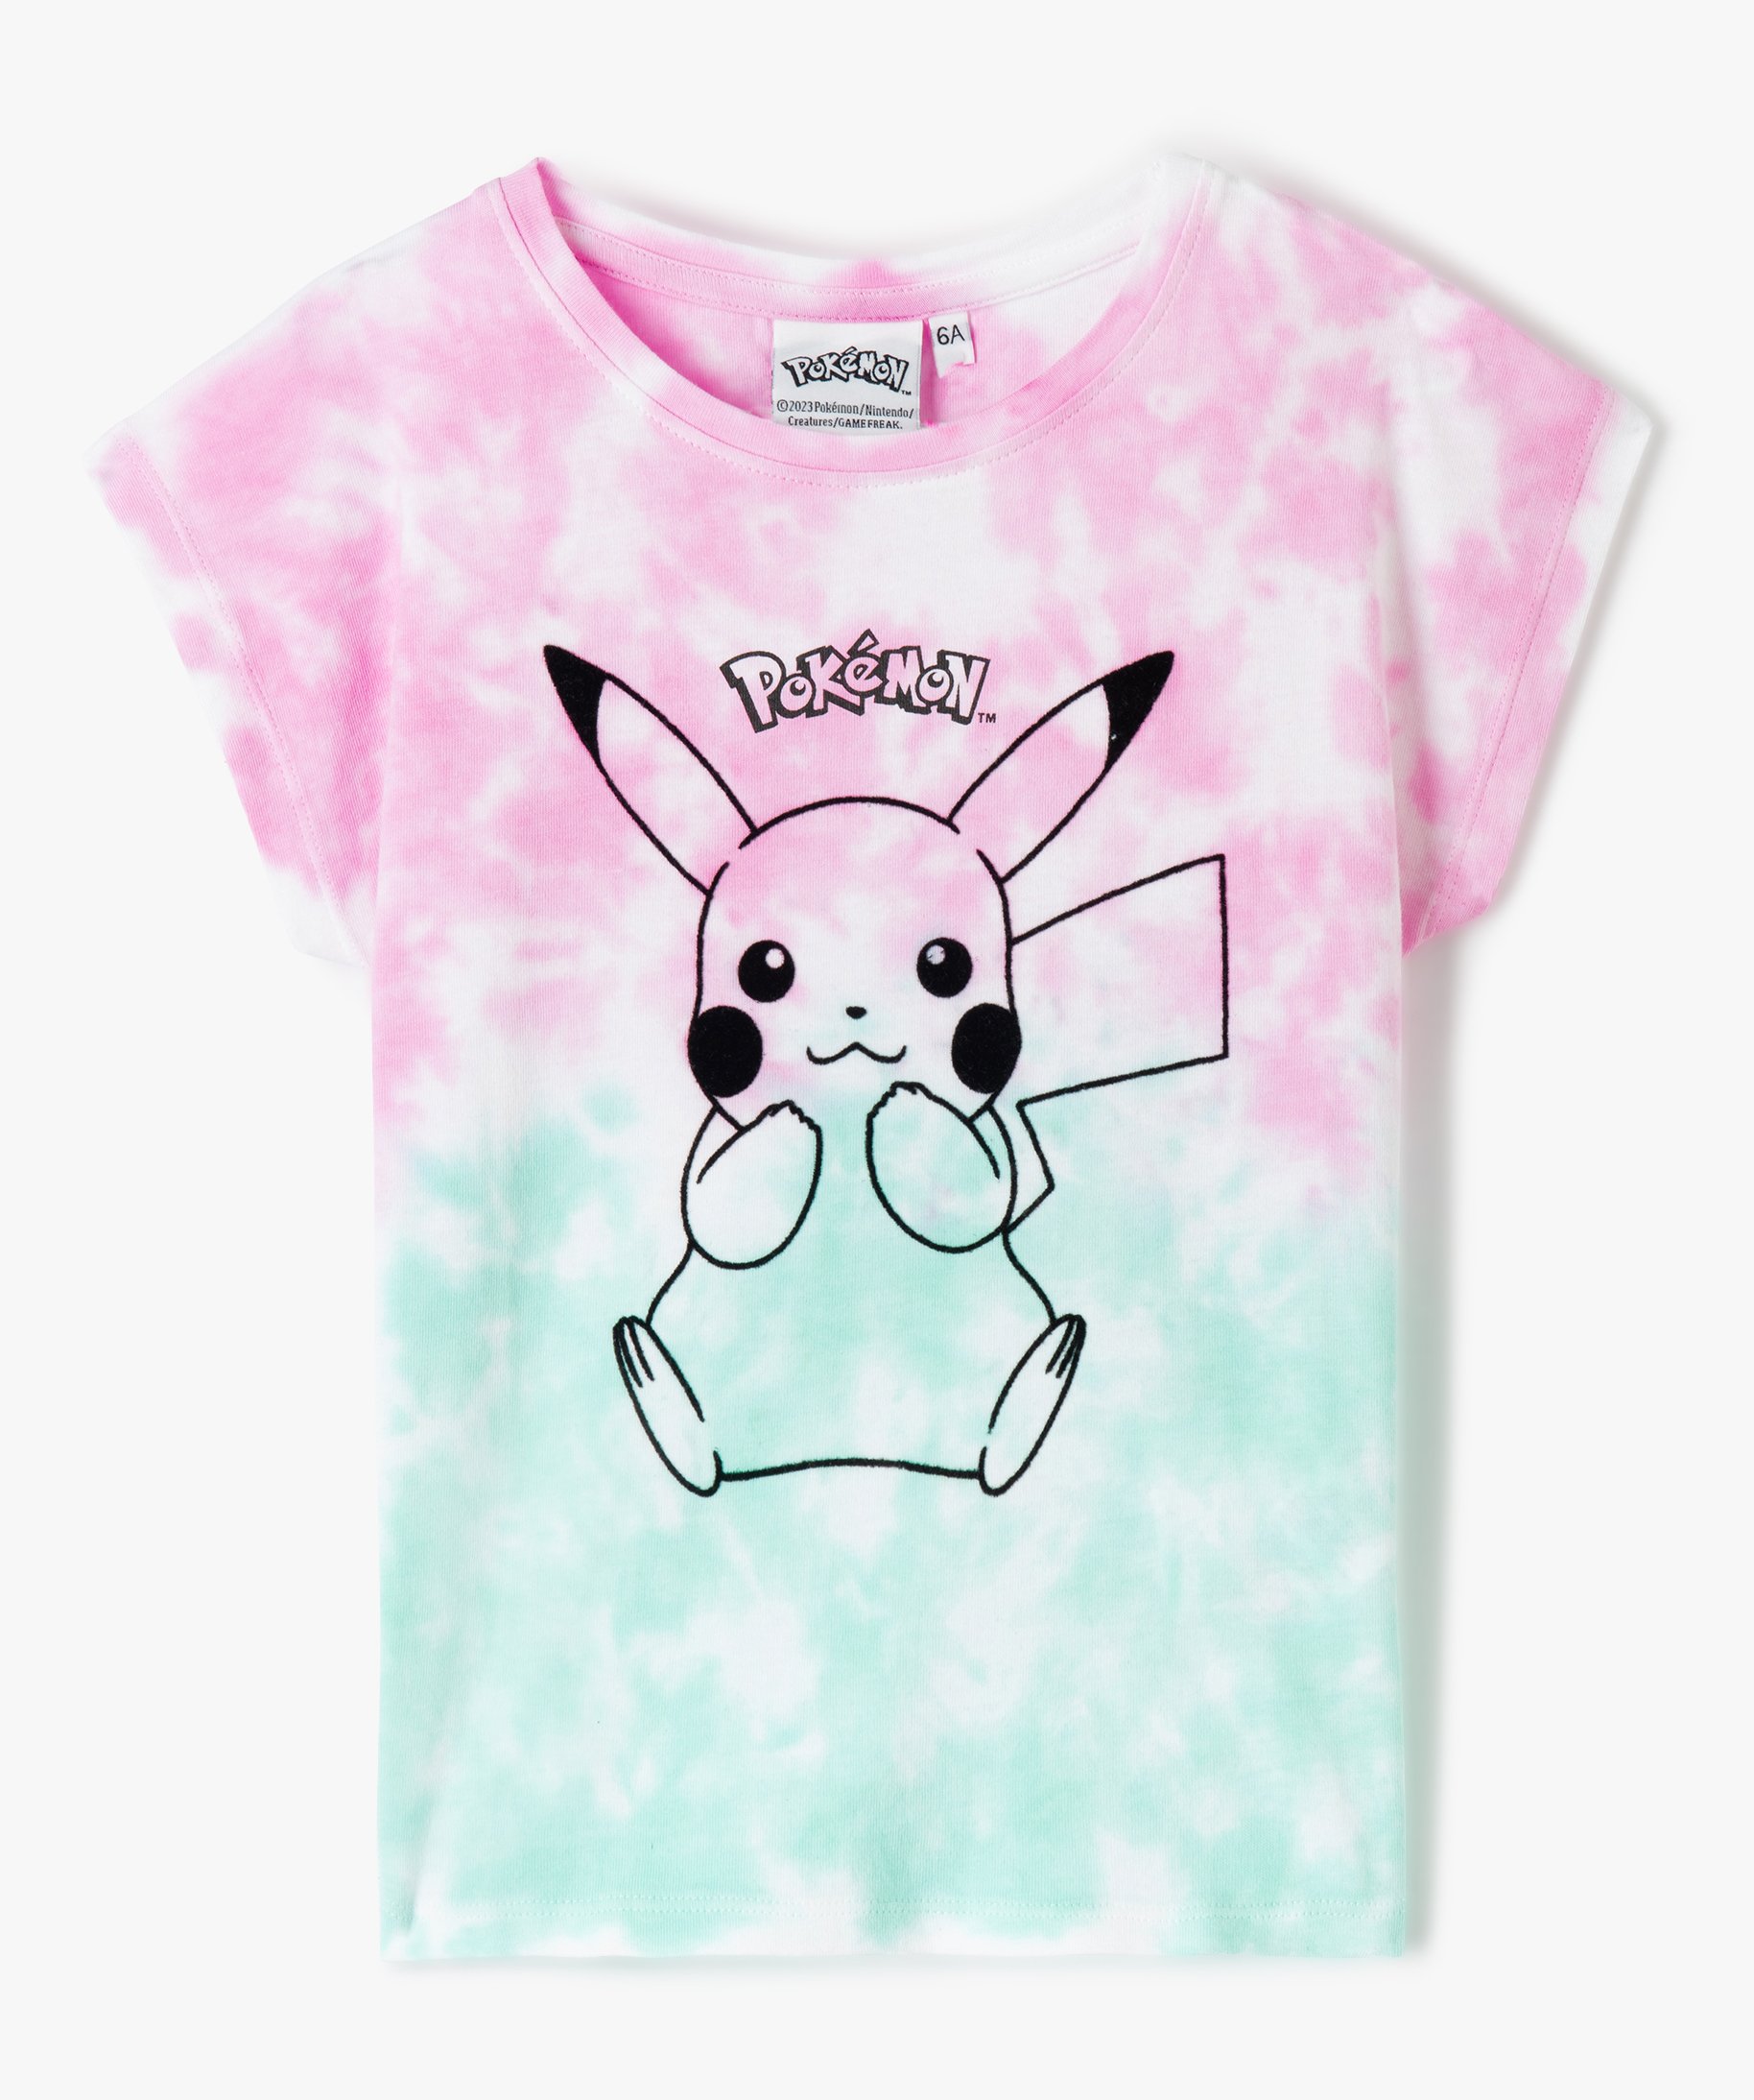 Acheter Tee-shirt enfant Pokémon Rose ? Bon et bon marché